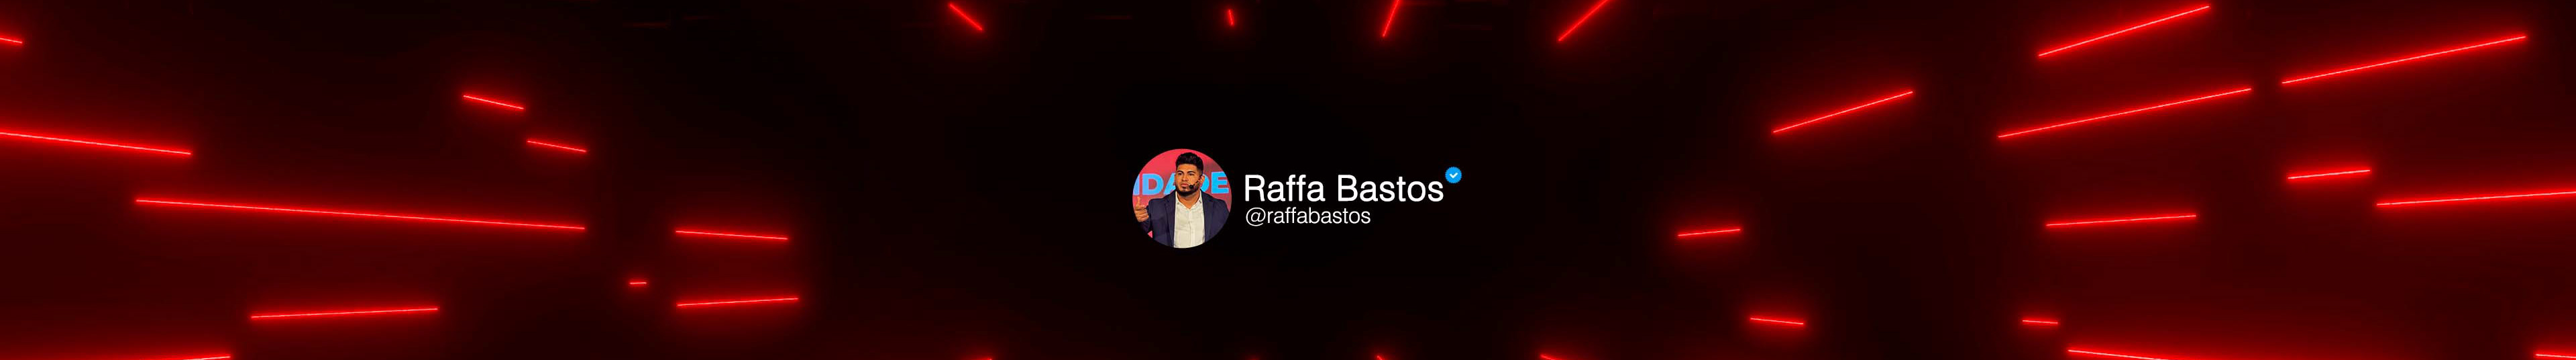 Raffa Bastos's profile banner